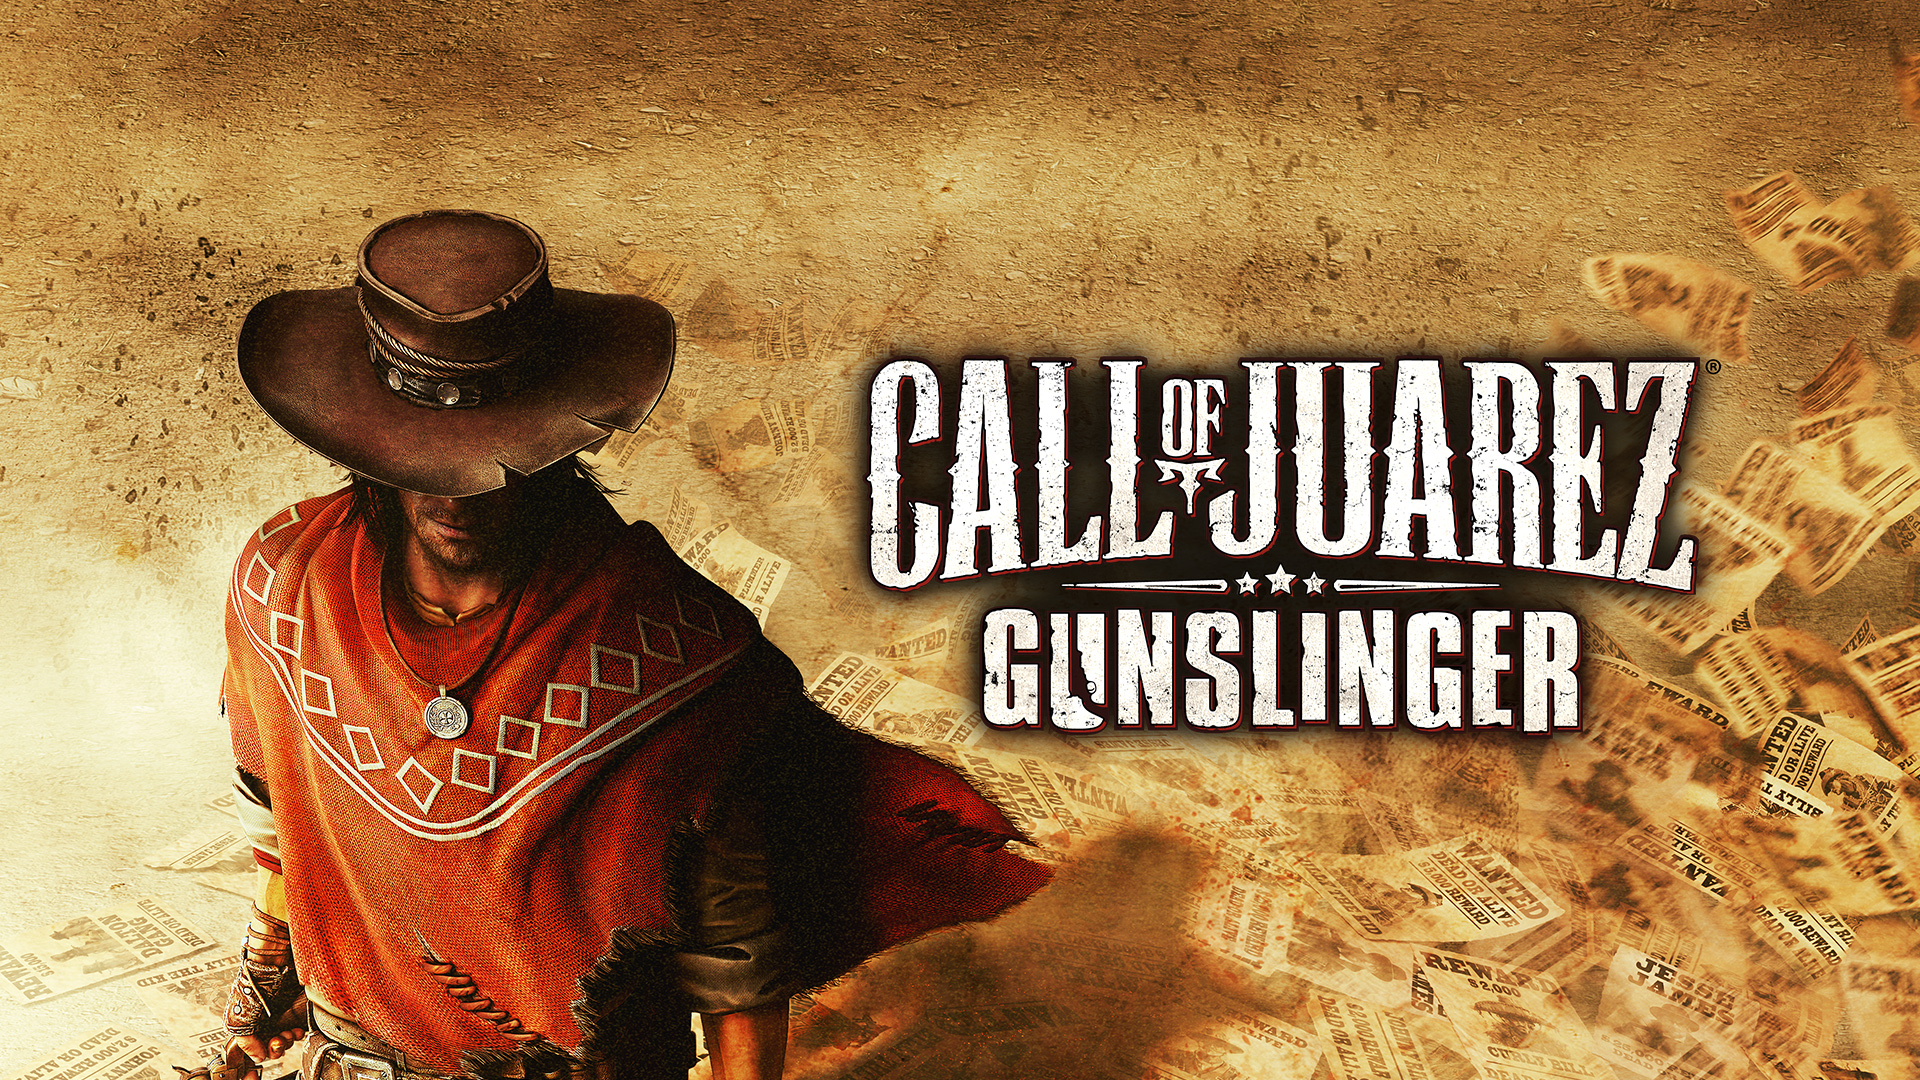 Call of juarez gunslinger steam required фото 10